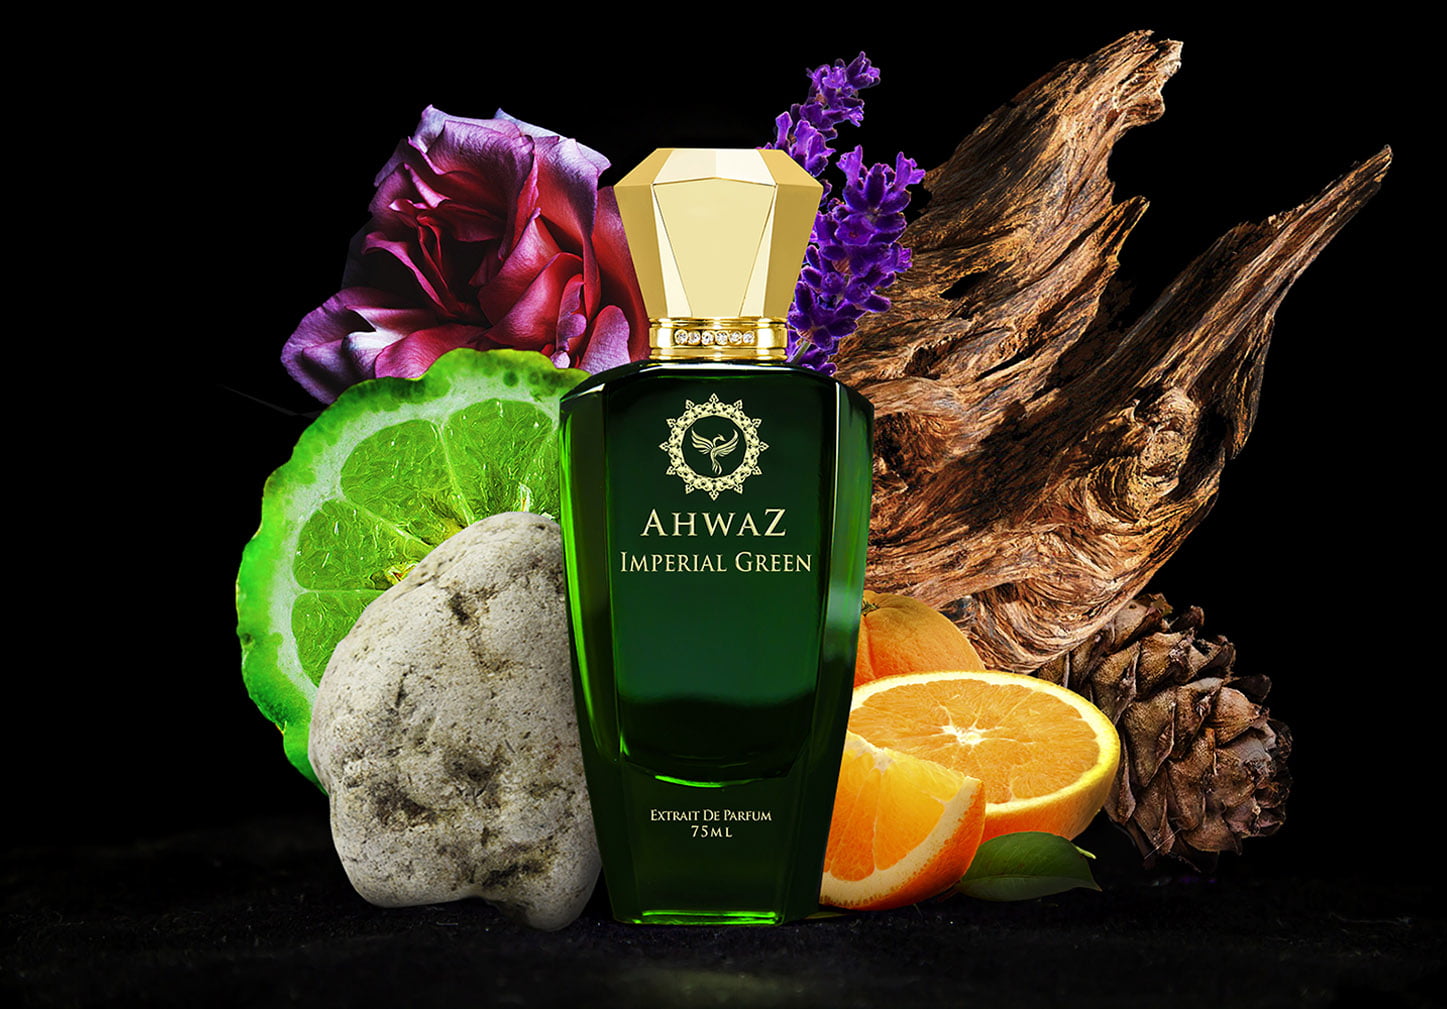 Imperial Green perfume bottle by Ahwaz Fragrance